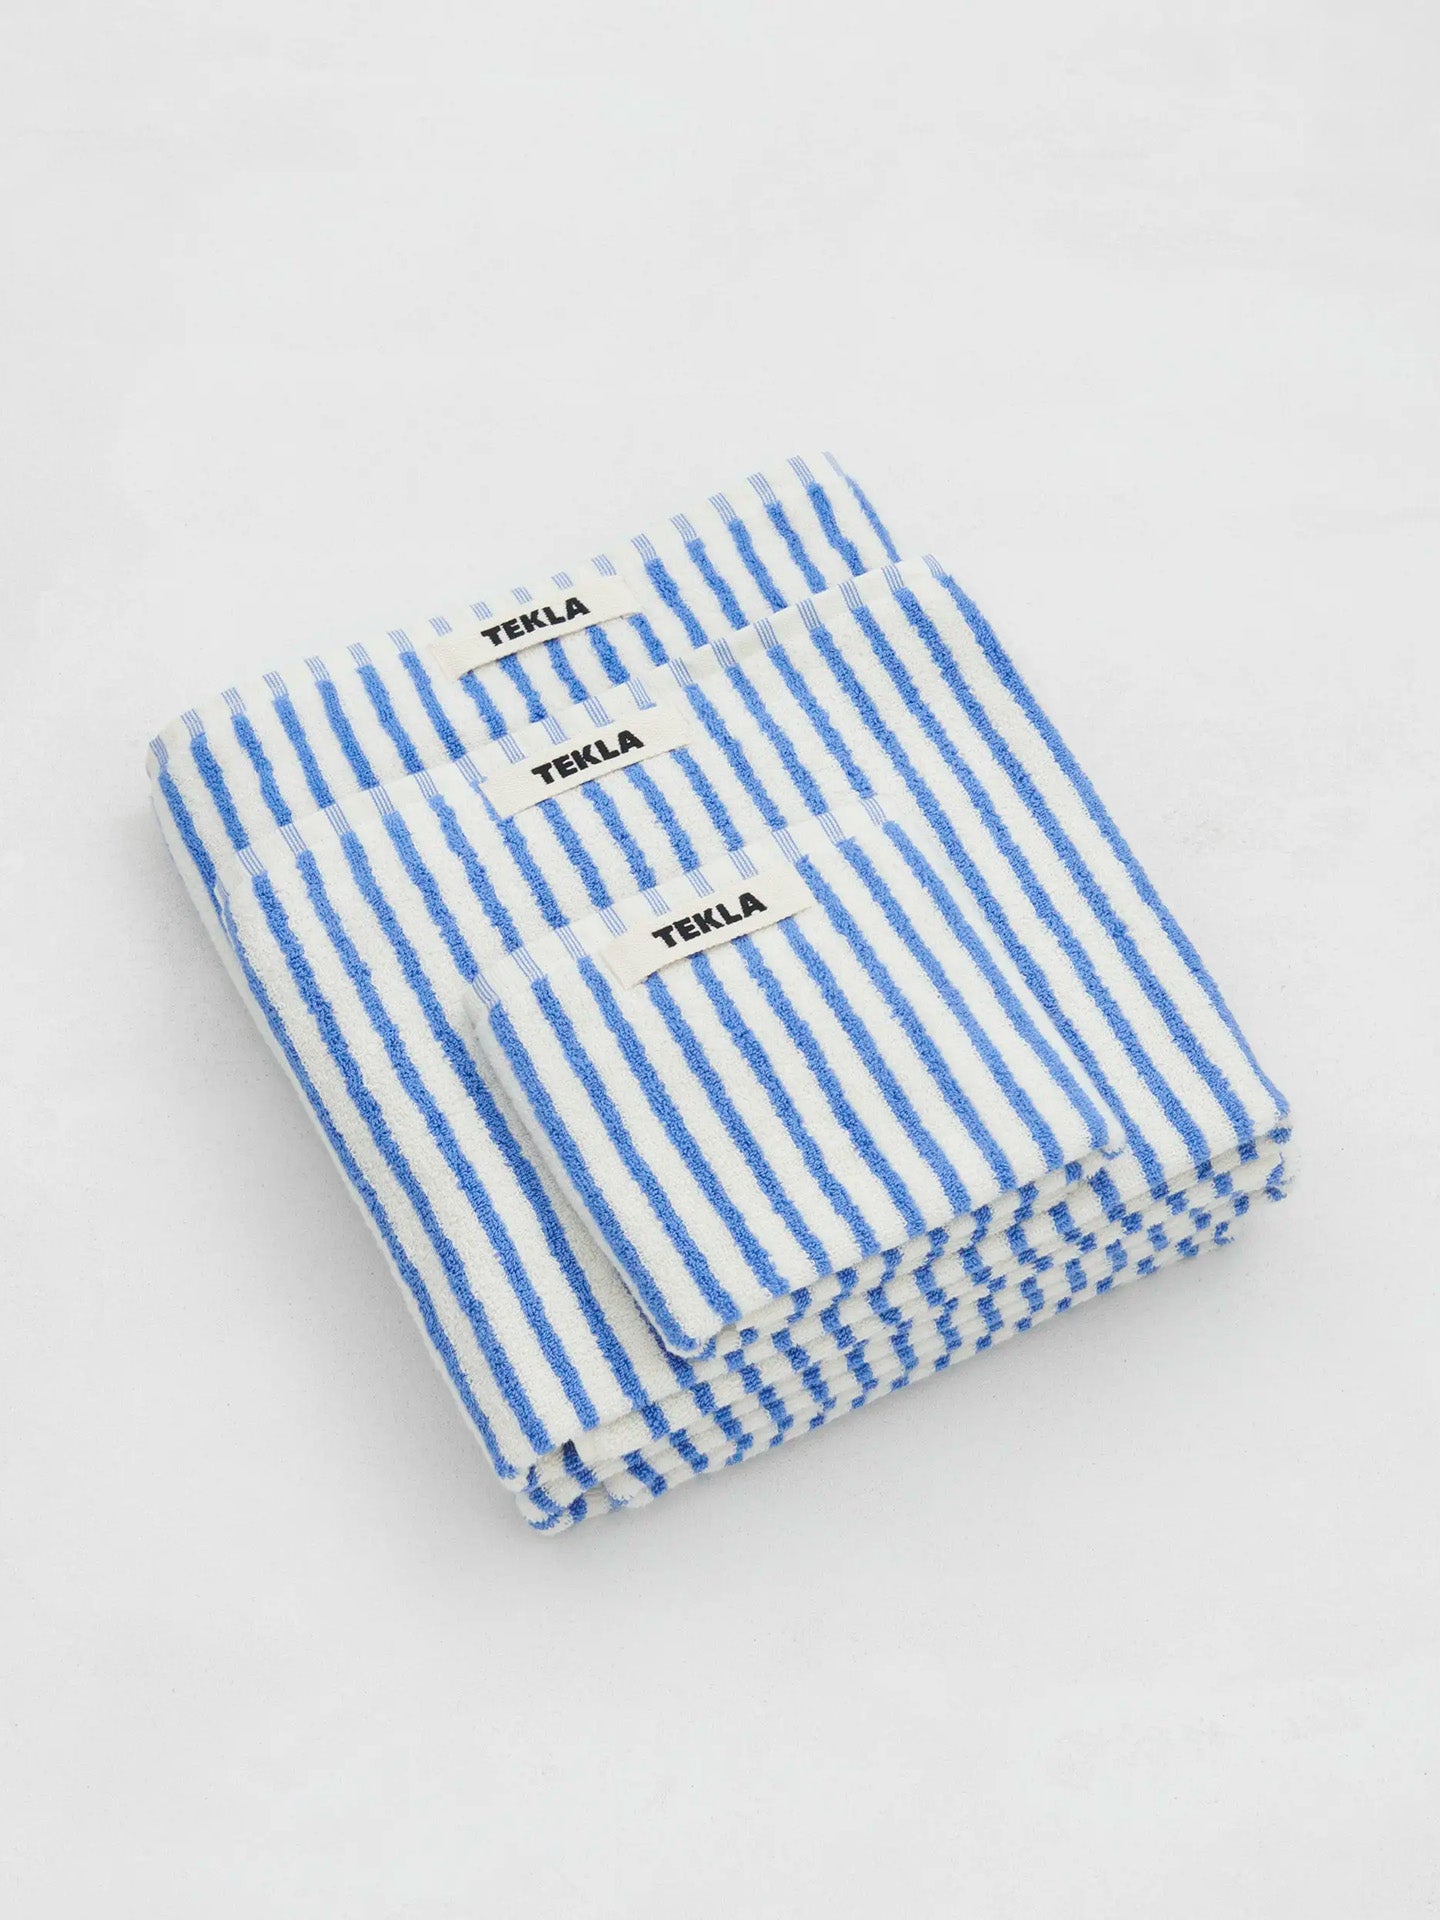 Terry Bath Towel, Coastal blue stripes